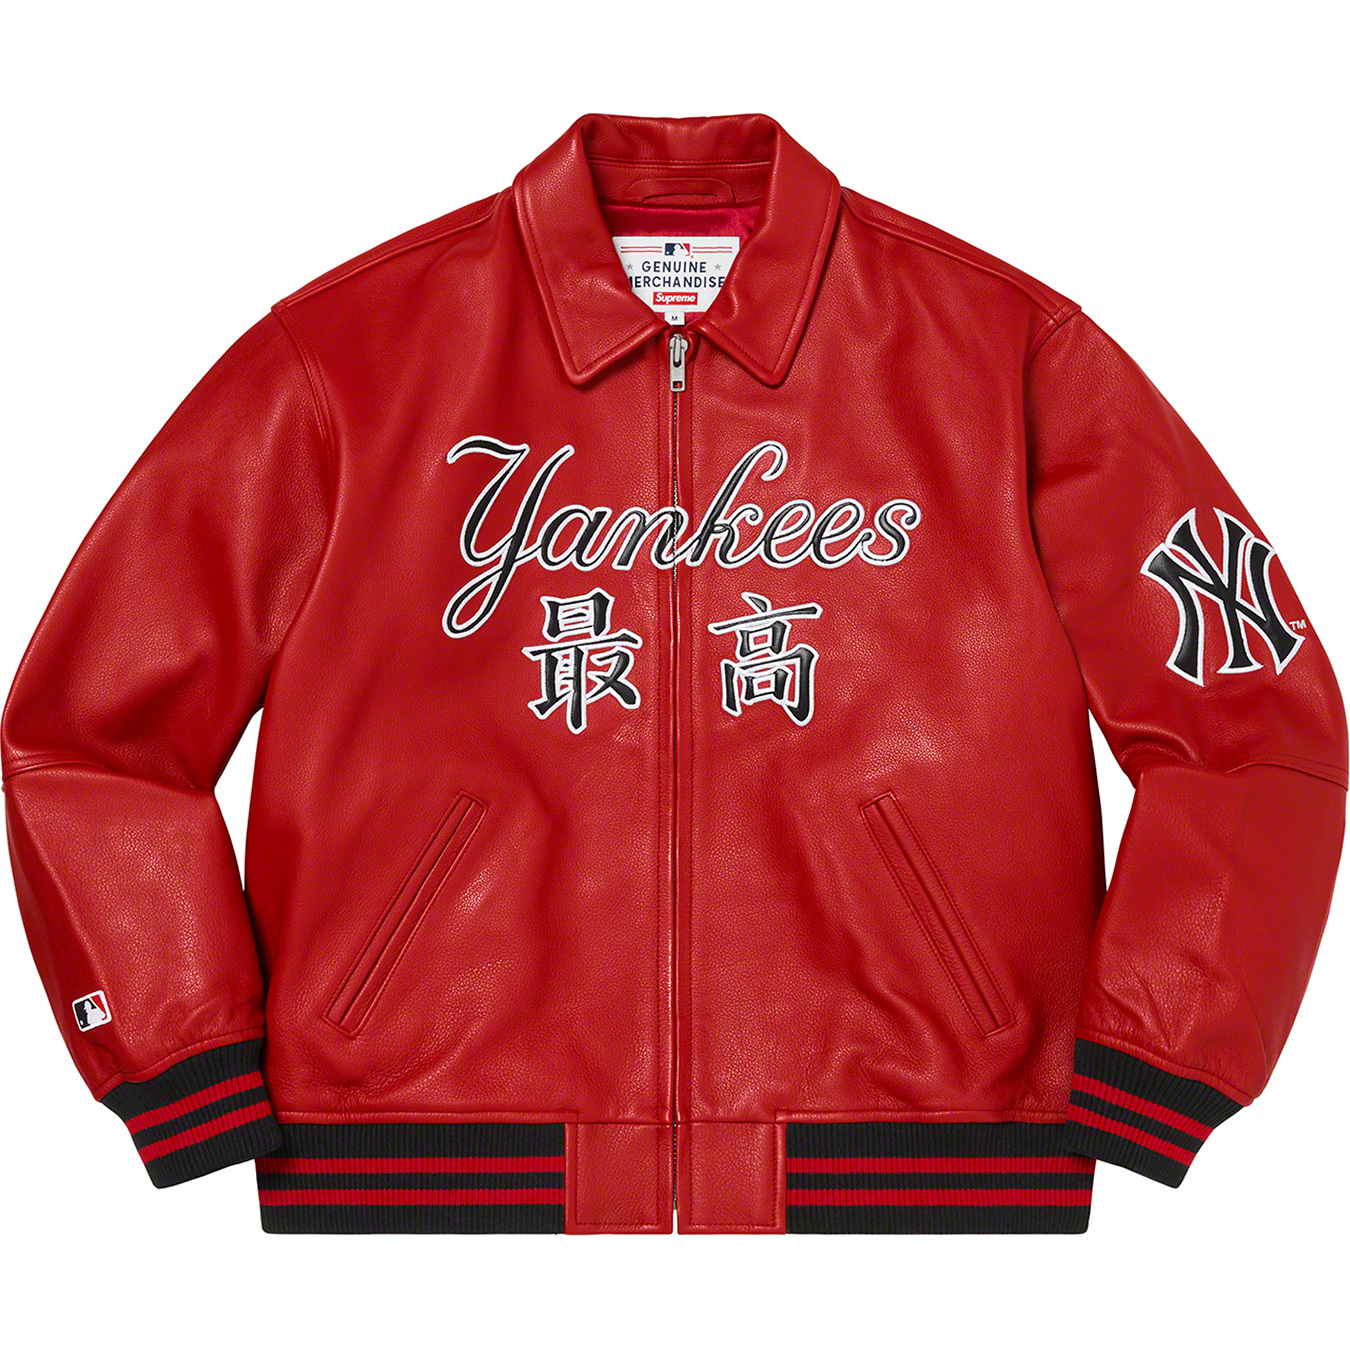 Supreme®/New York Yankees™ Kanji Leather Varsity Jacket | Supreme 22fw